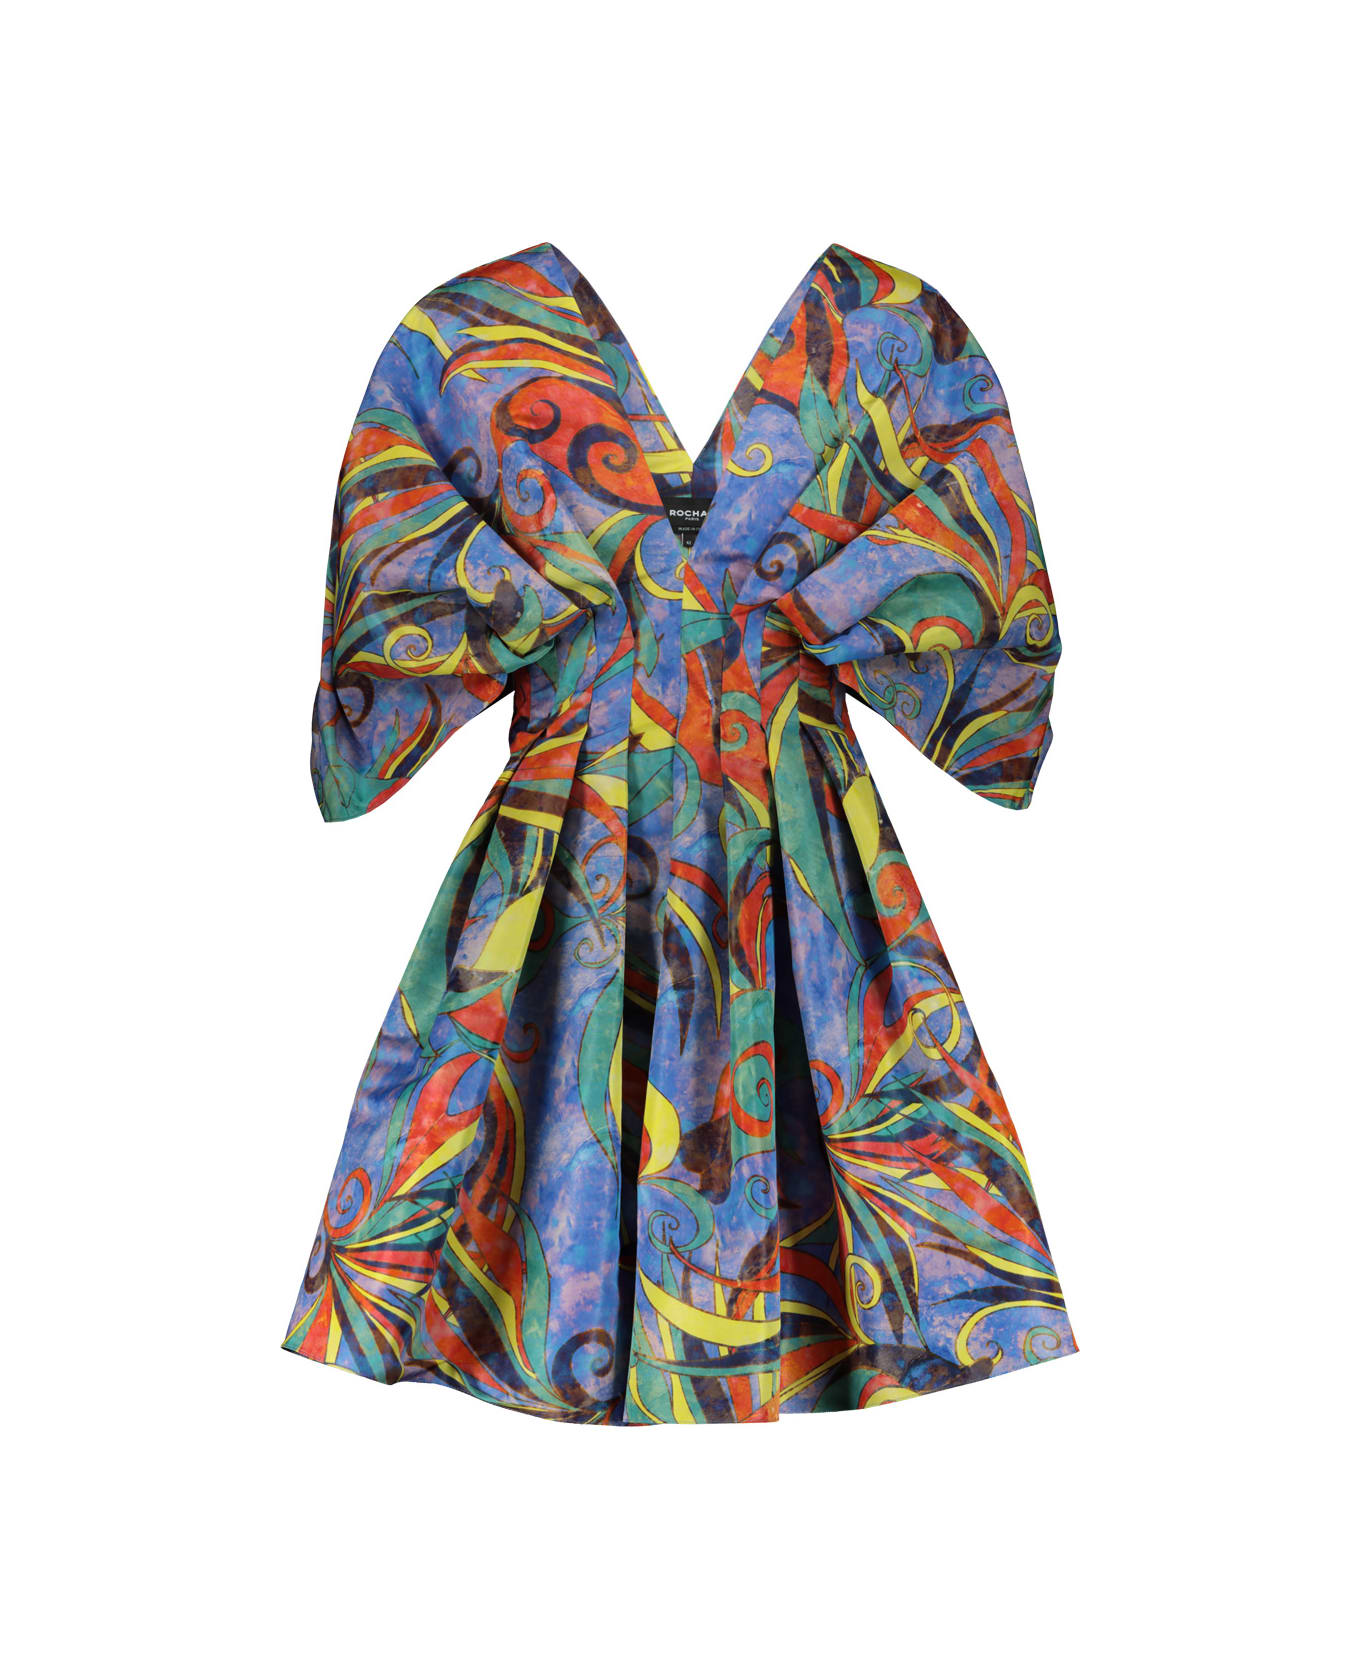 Rochas Mini Dress In Printed Double Taffeta Whit Pleated Details. - BLUE